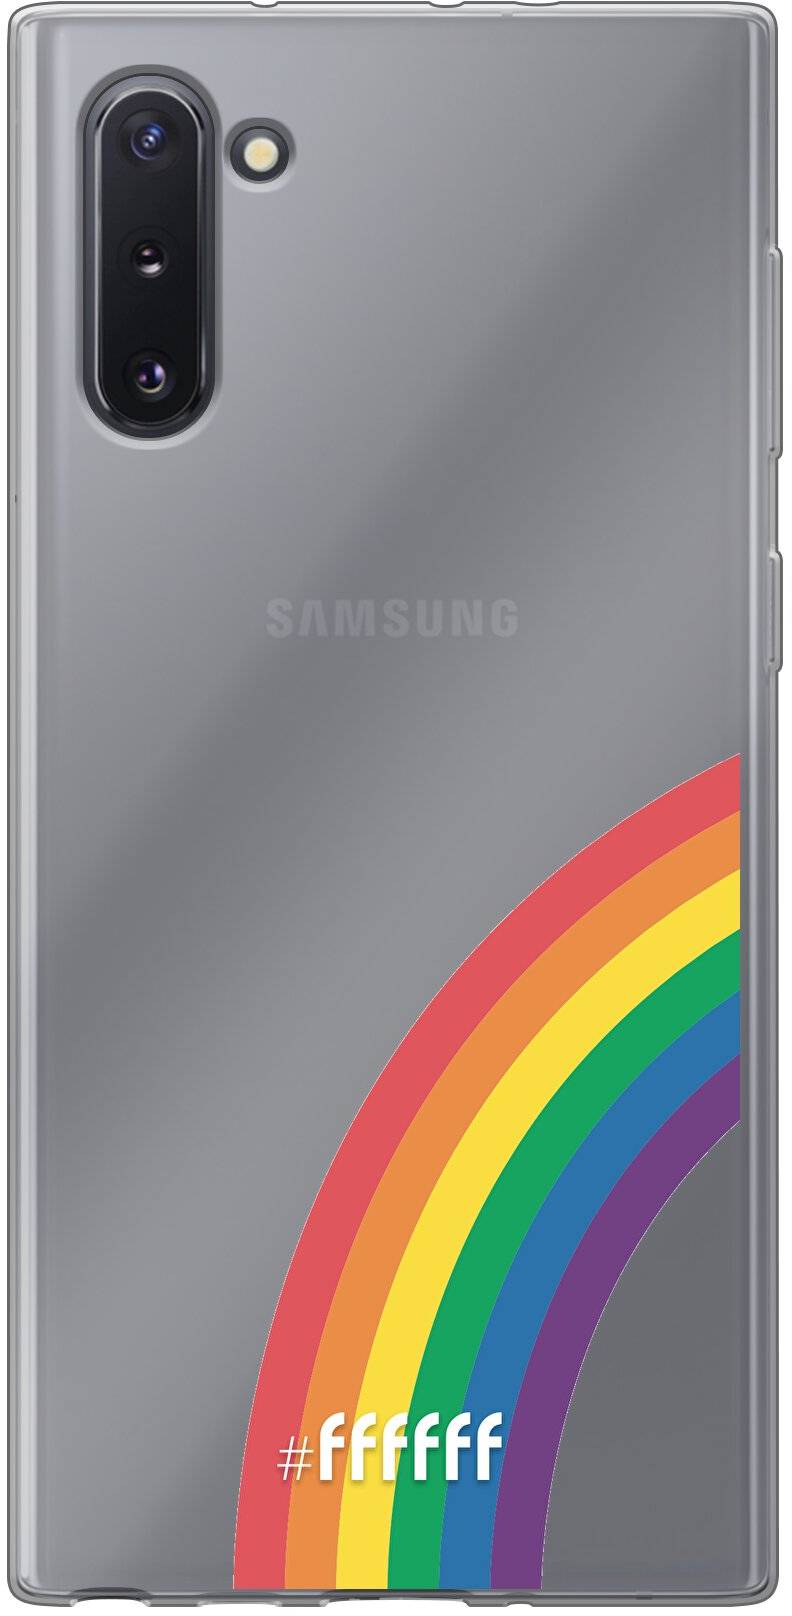 #LGBT - Rainbow Galaxy Note 10